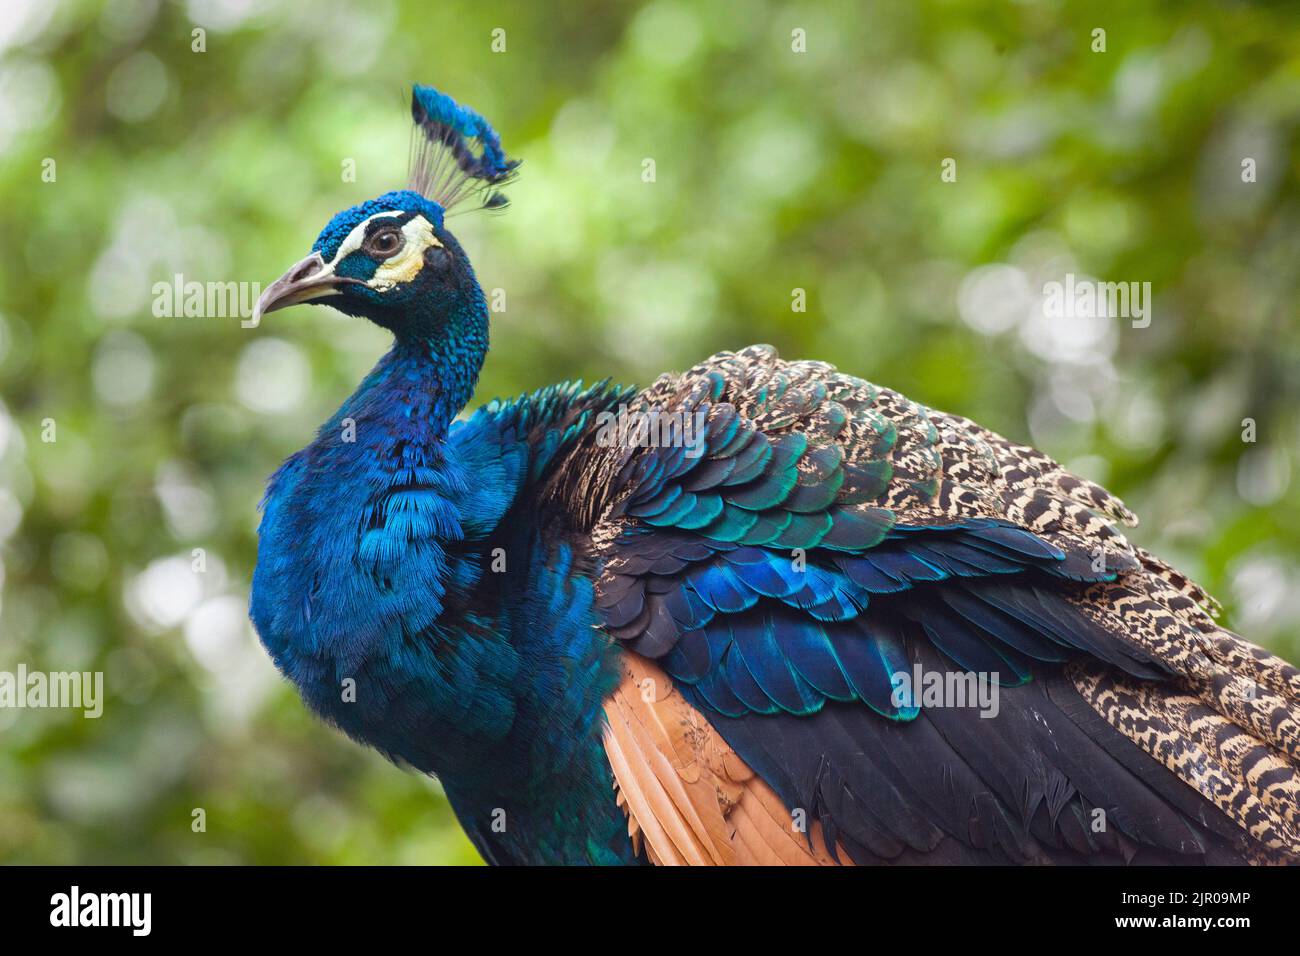 Peafowl indio, pavo cristatus, hombre, cabeza y cuello mostrando plumaje iridiscente de plumas Foto de stock